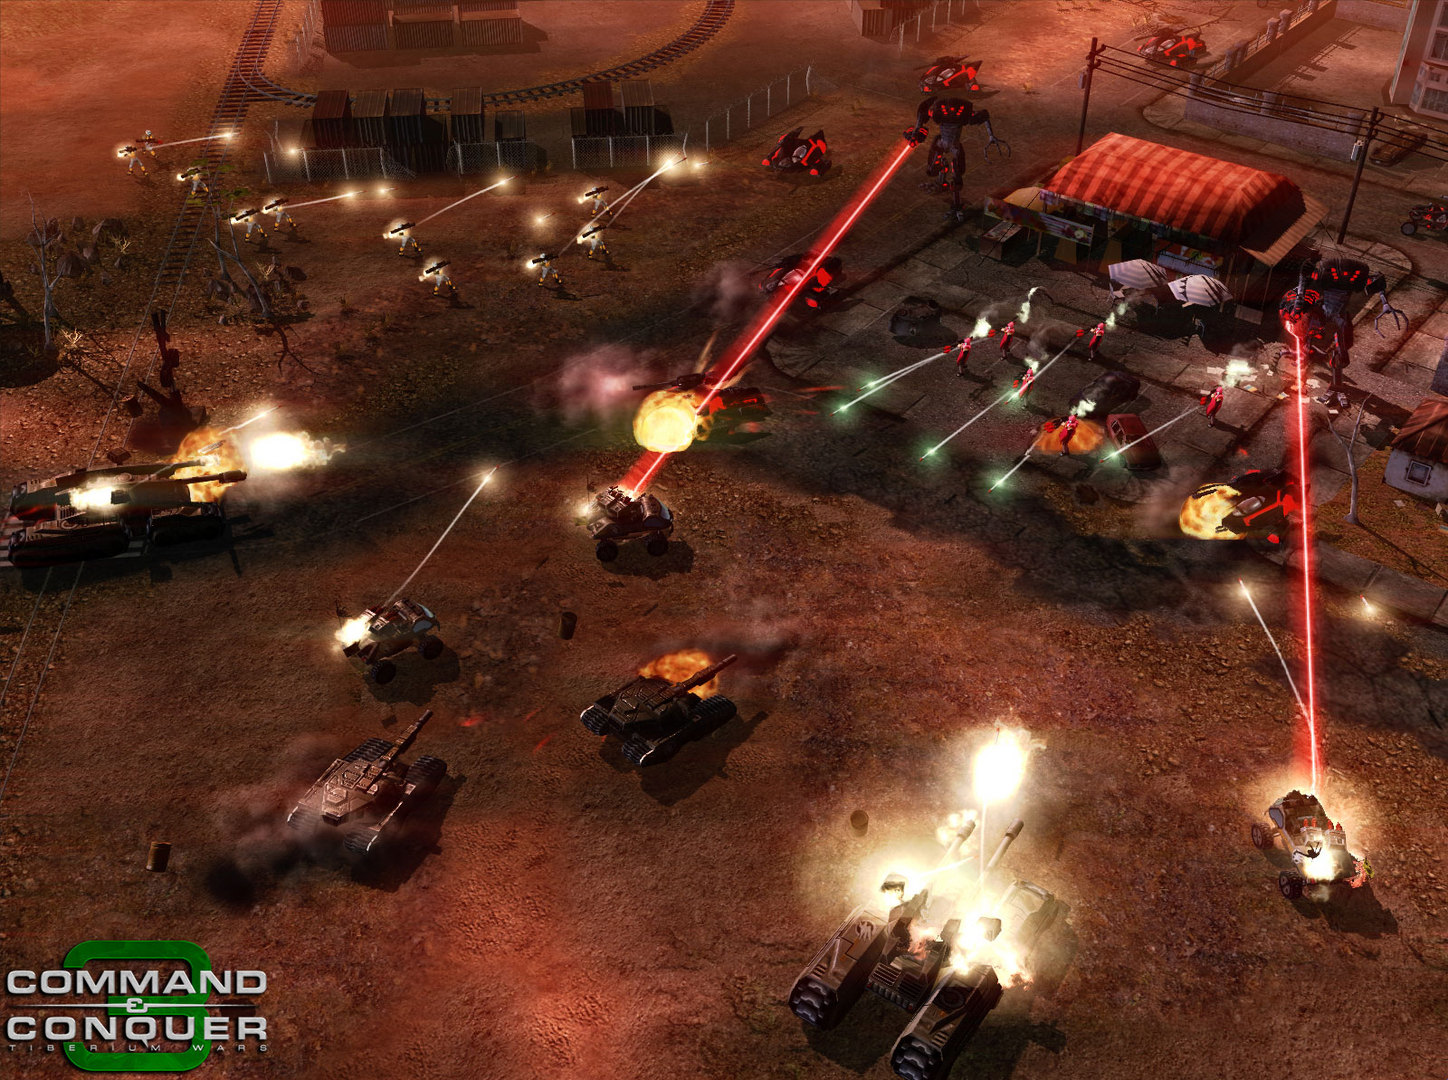 Command & Conquer 3 Tiberium Wars™ Featured Screenshot #1